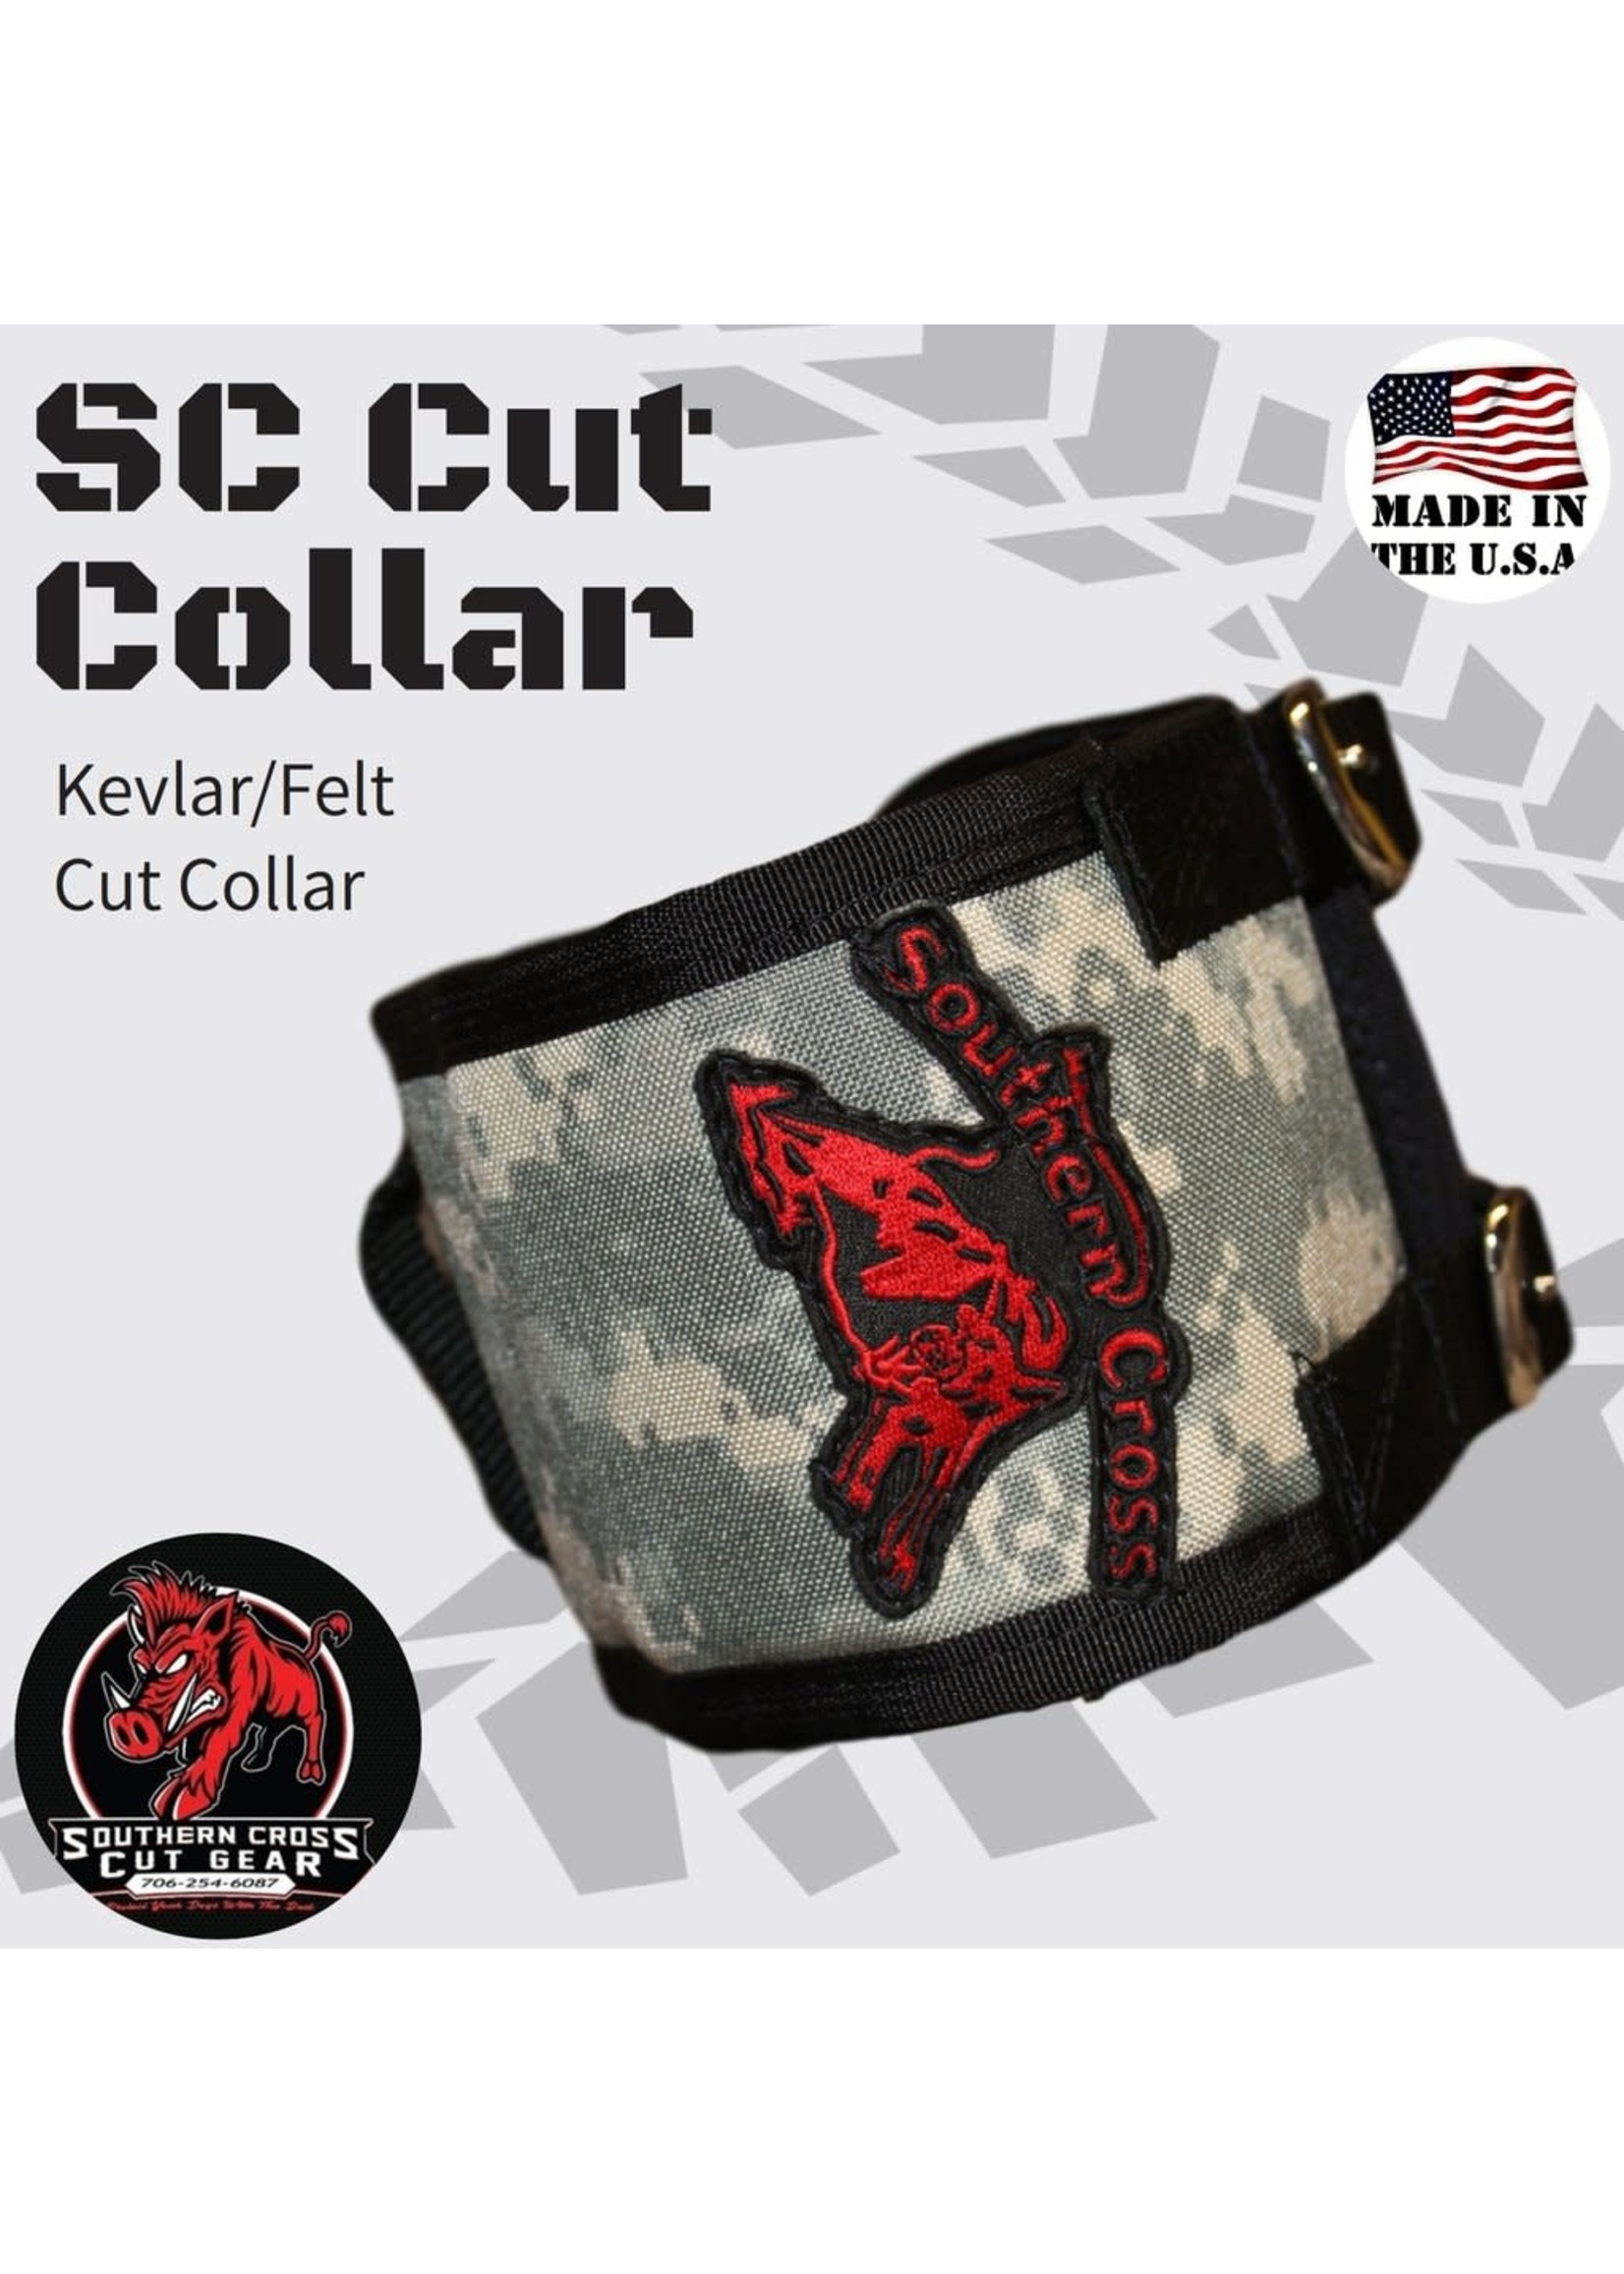 Southern Cross Cut Gear Southern Cross Cut Gear - Cut Collar Small